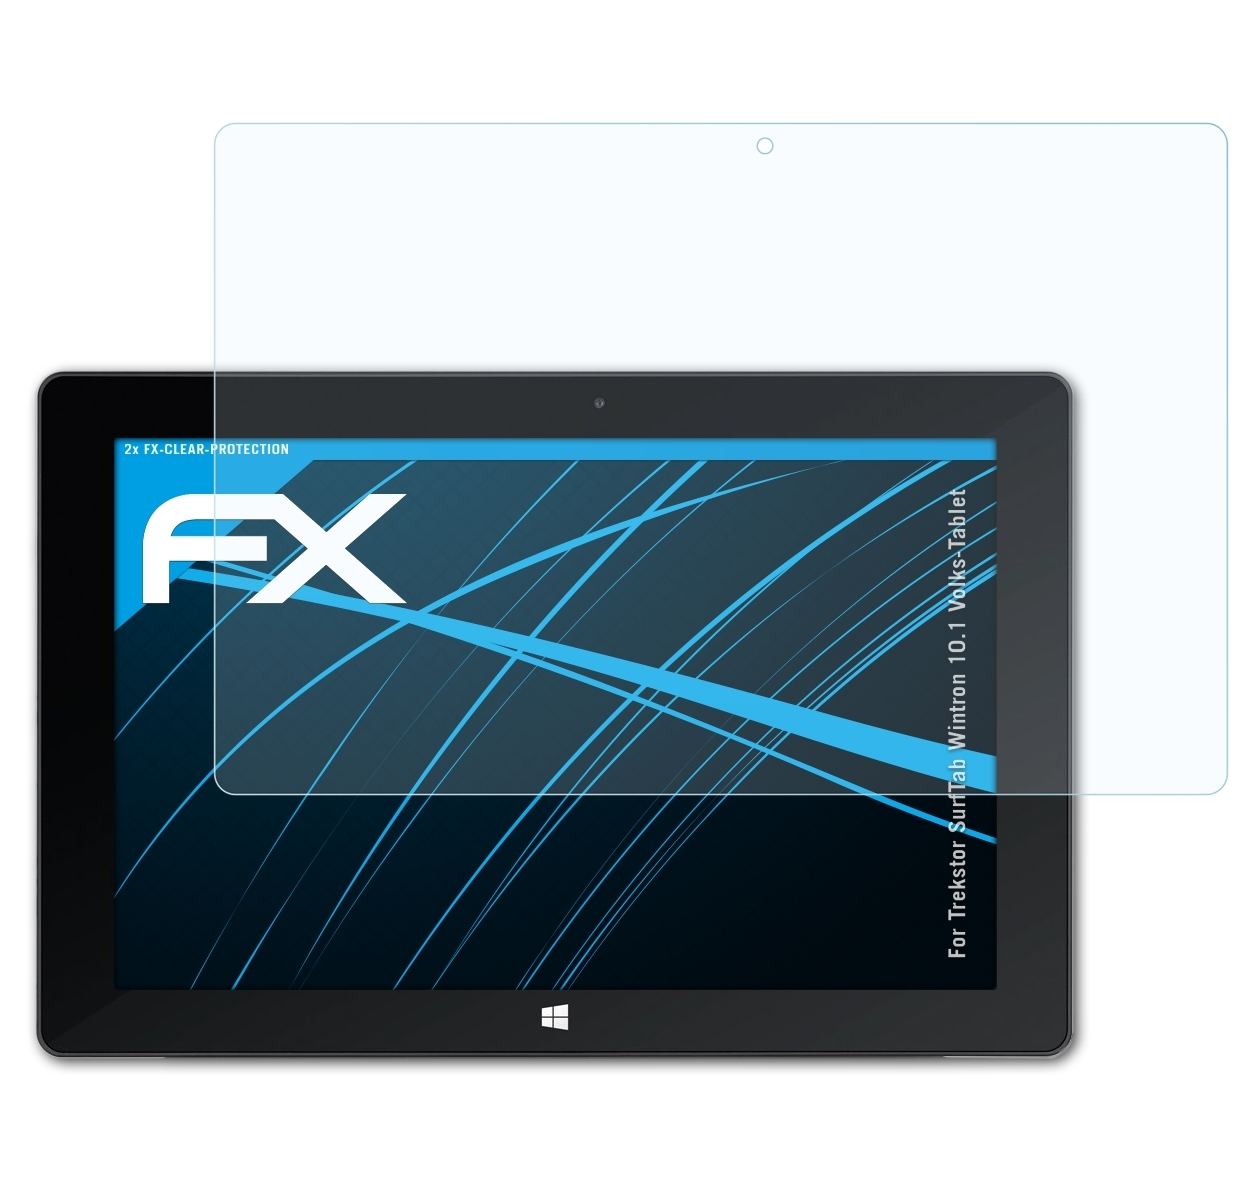 ATFOLIX 2x FX-Clear Displayschutz(für Trekstor Wintron (Volks-Tablet)) 10.1 SurfTab